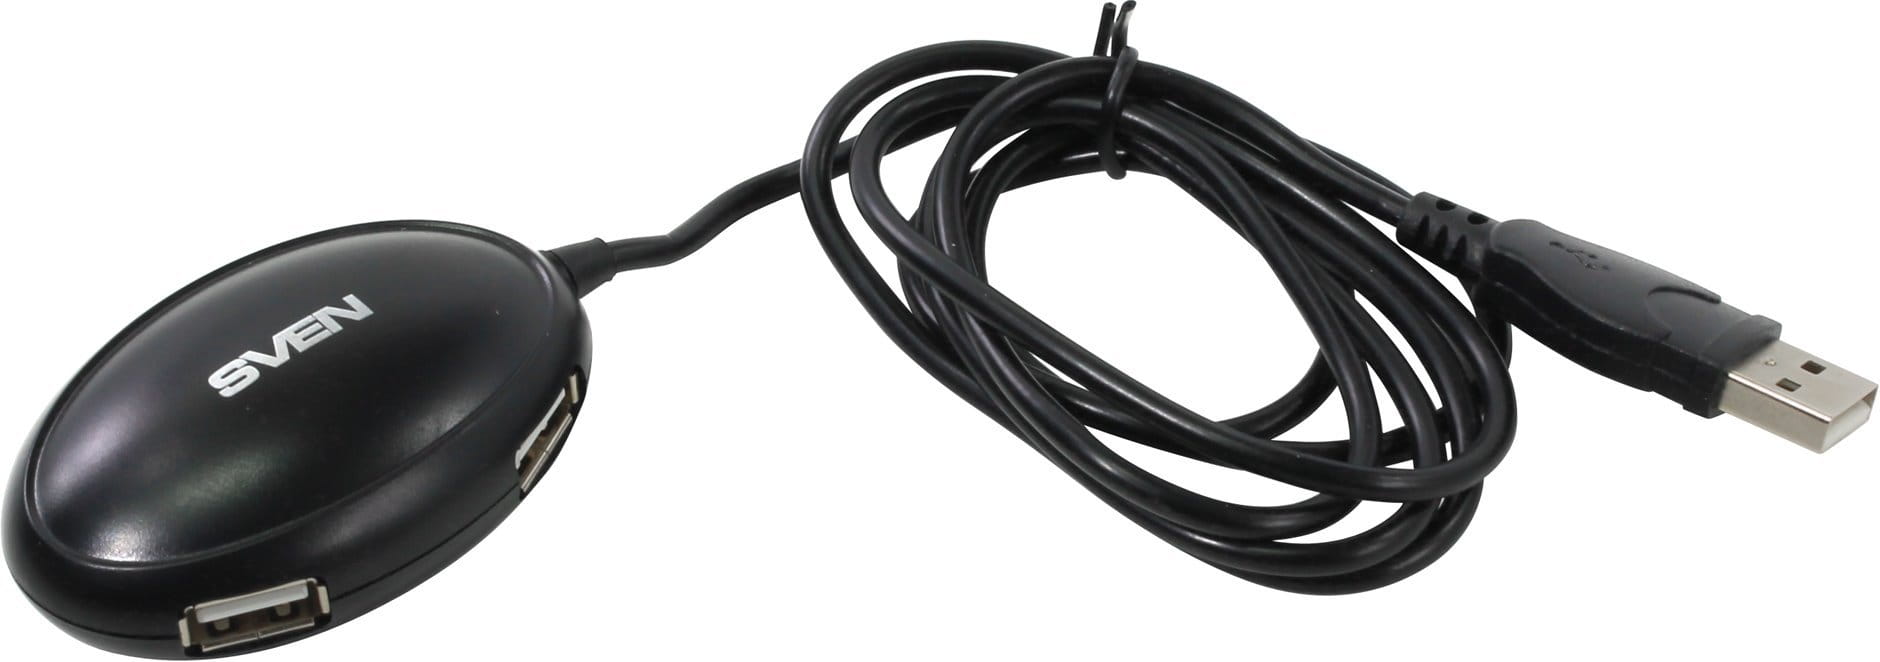 Sven USB Hub HB-401 Black